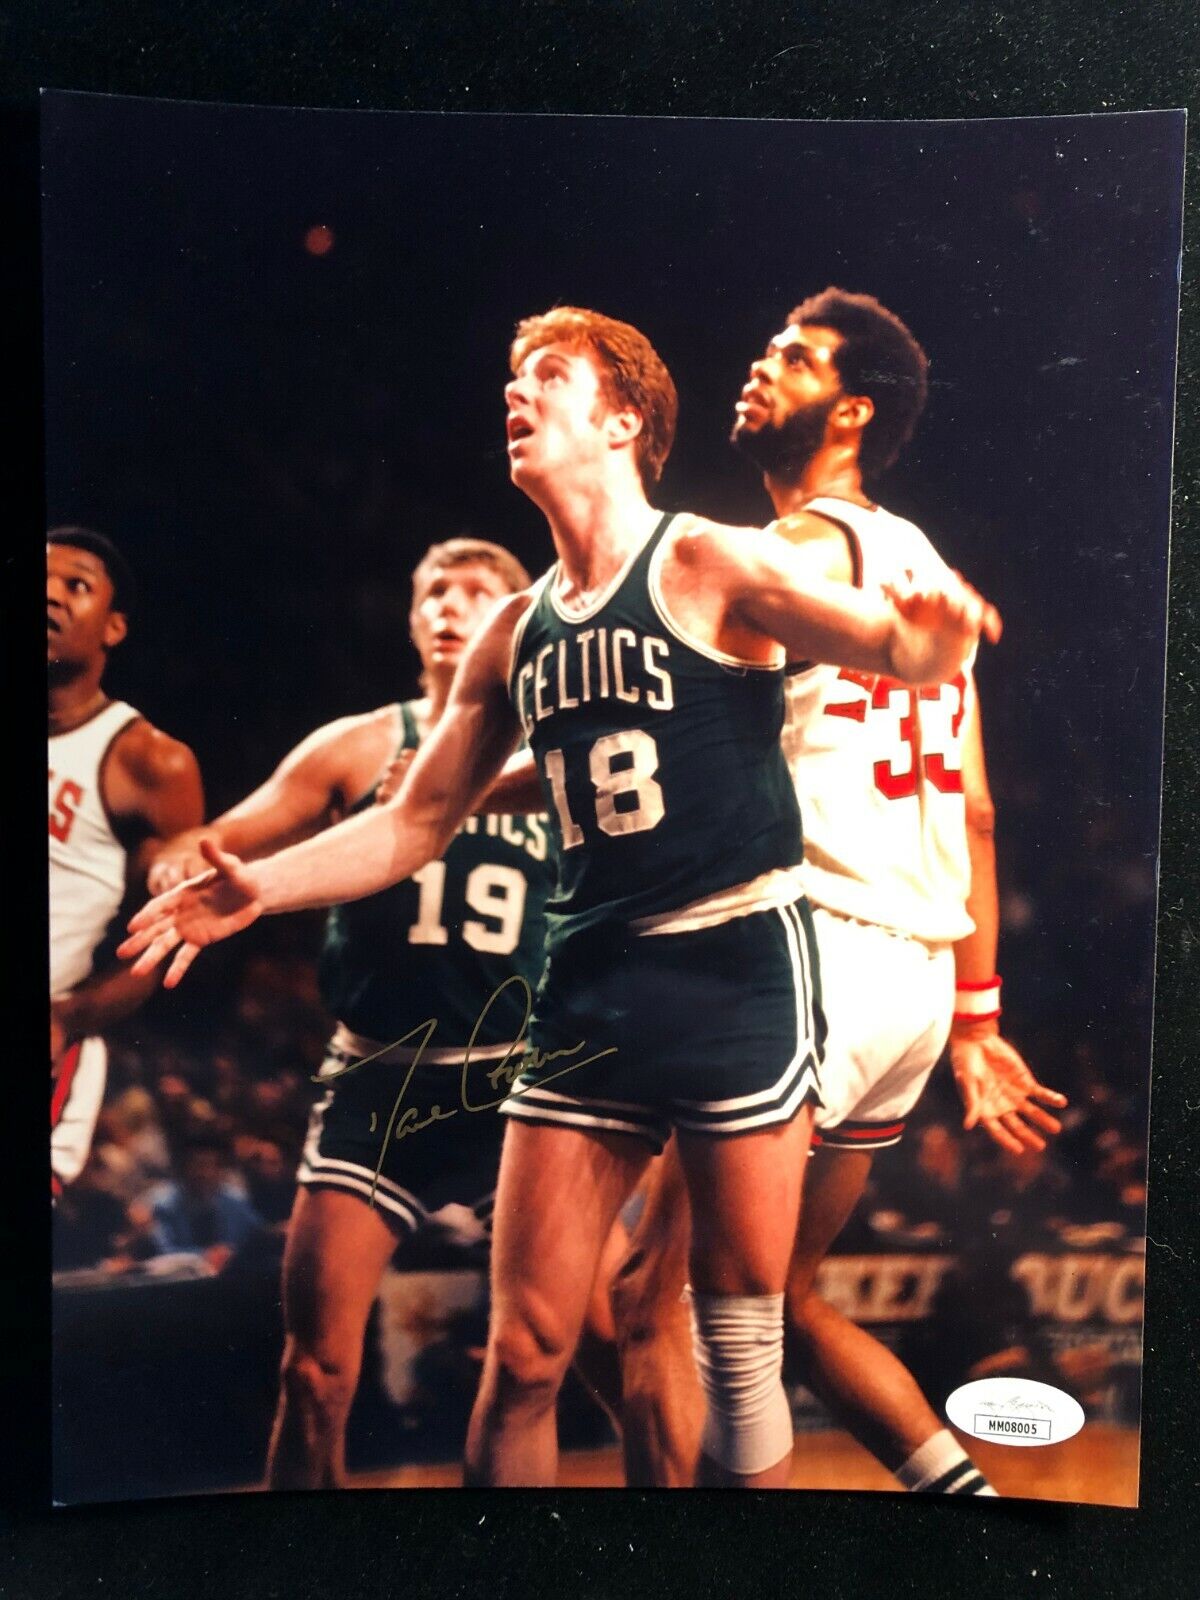 Dave Cowens Autographed Signed Photo Poster paintinggraph - 8x10 - Boston Celtics - JSA MM08005